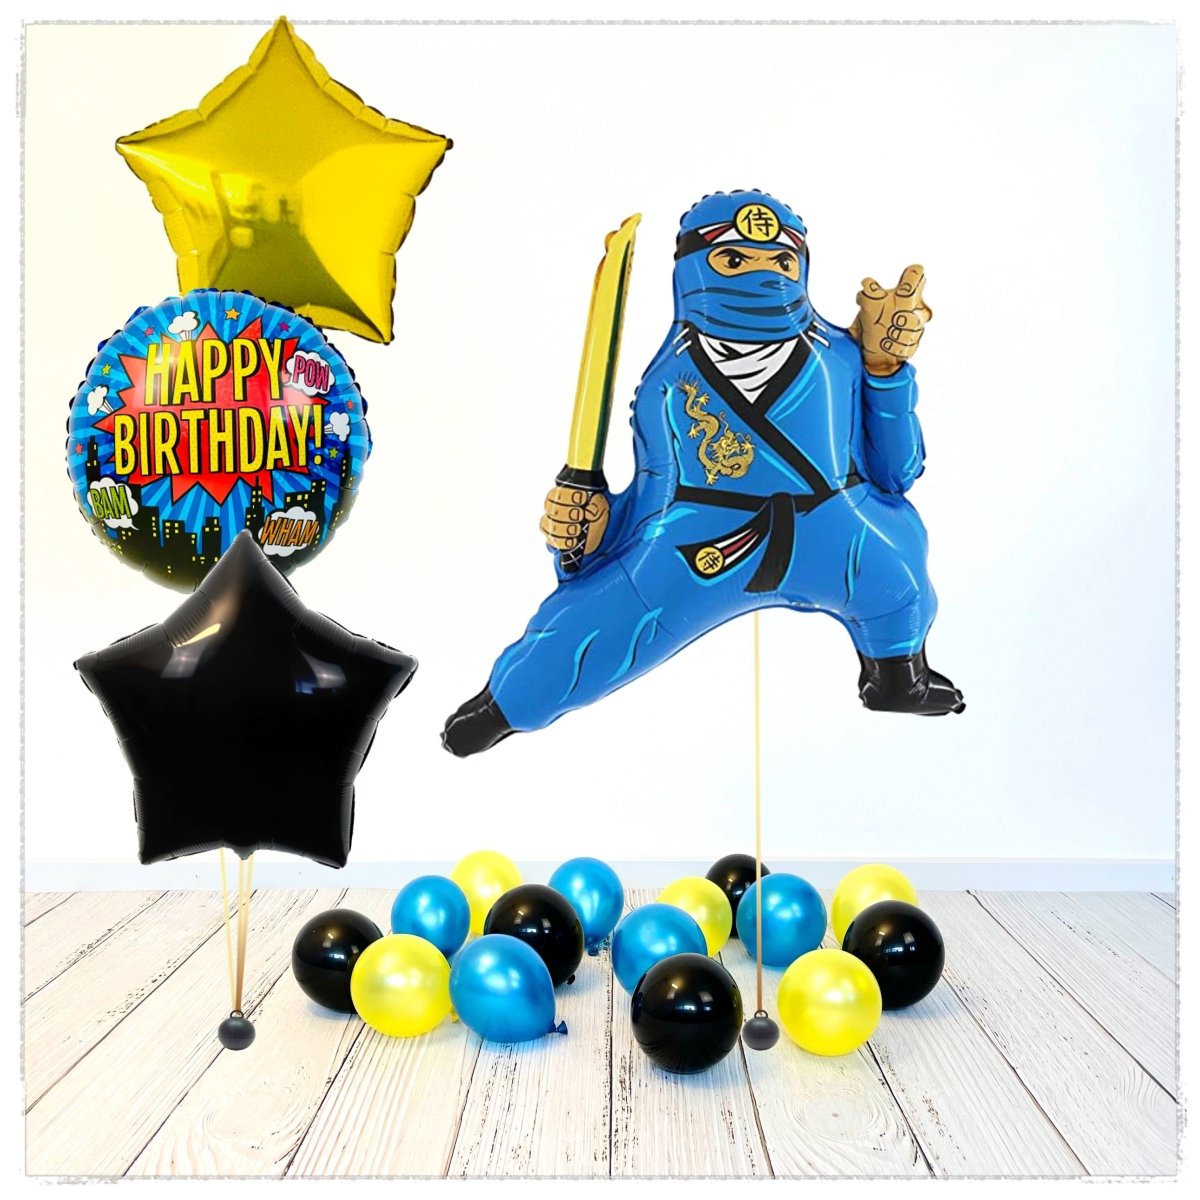 Bouquet de ballons joyeux anniversaire Ninja (Ninjago) (rempli d